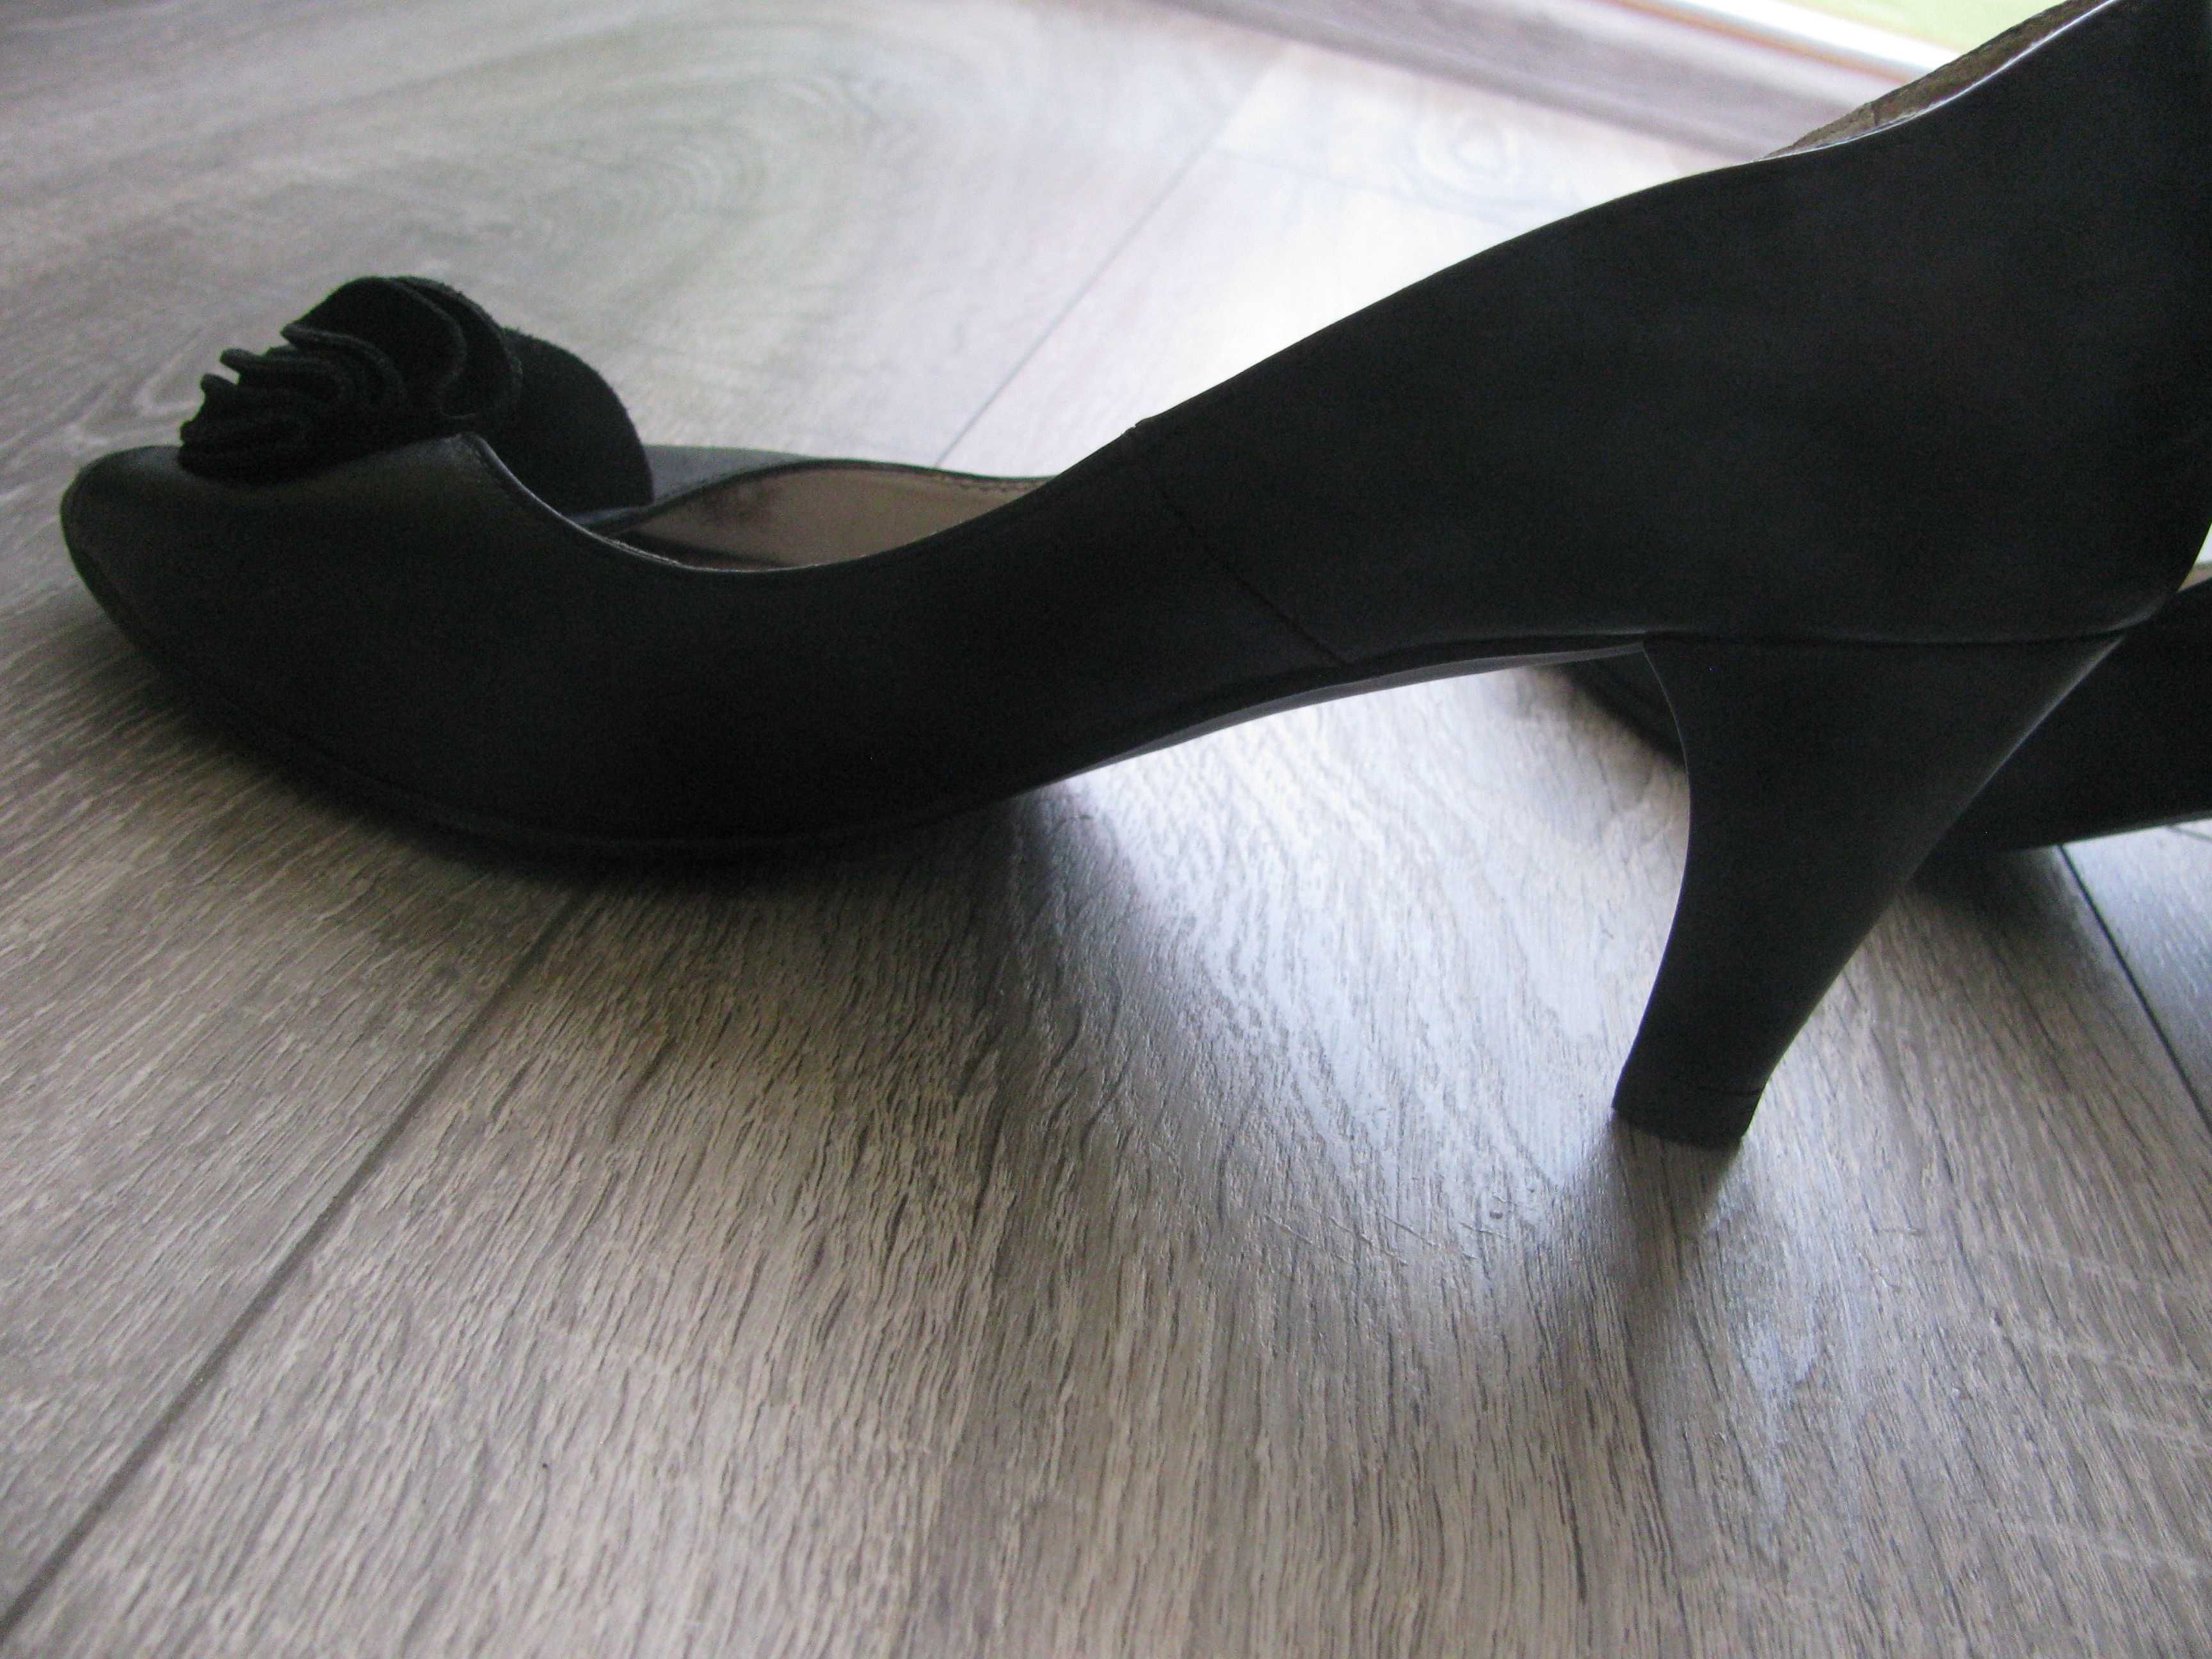 buty damskie na obcasie roz 37 skórzane czarne